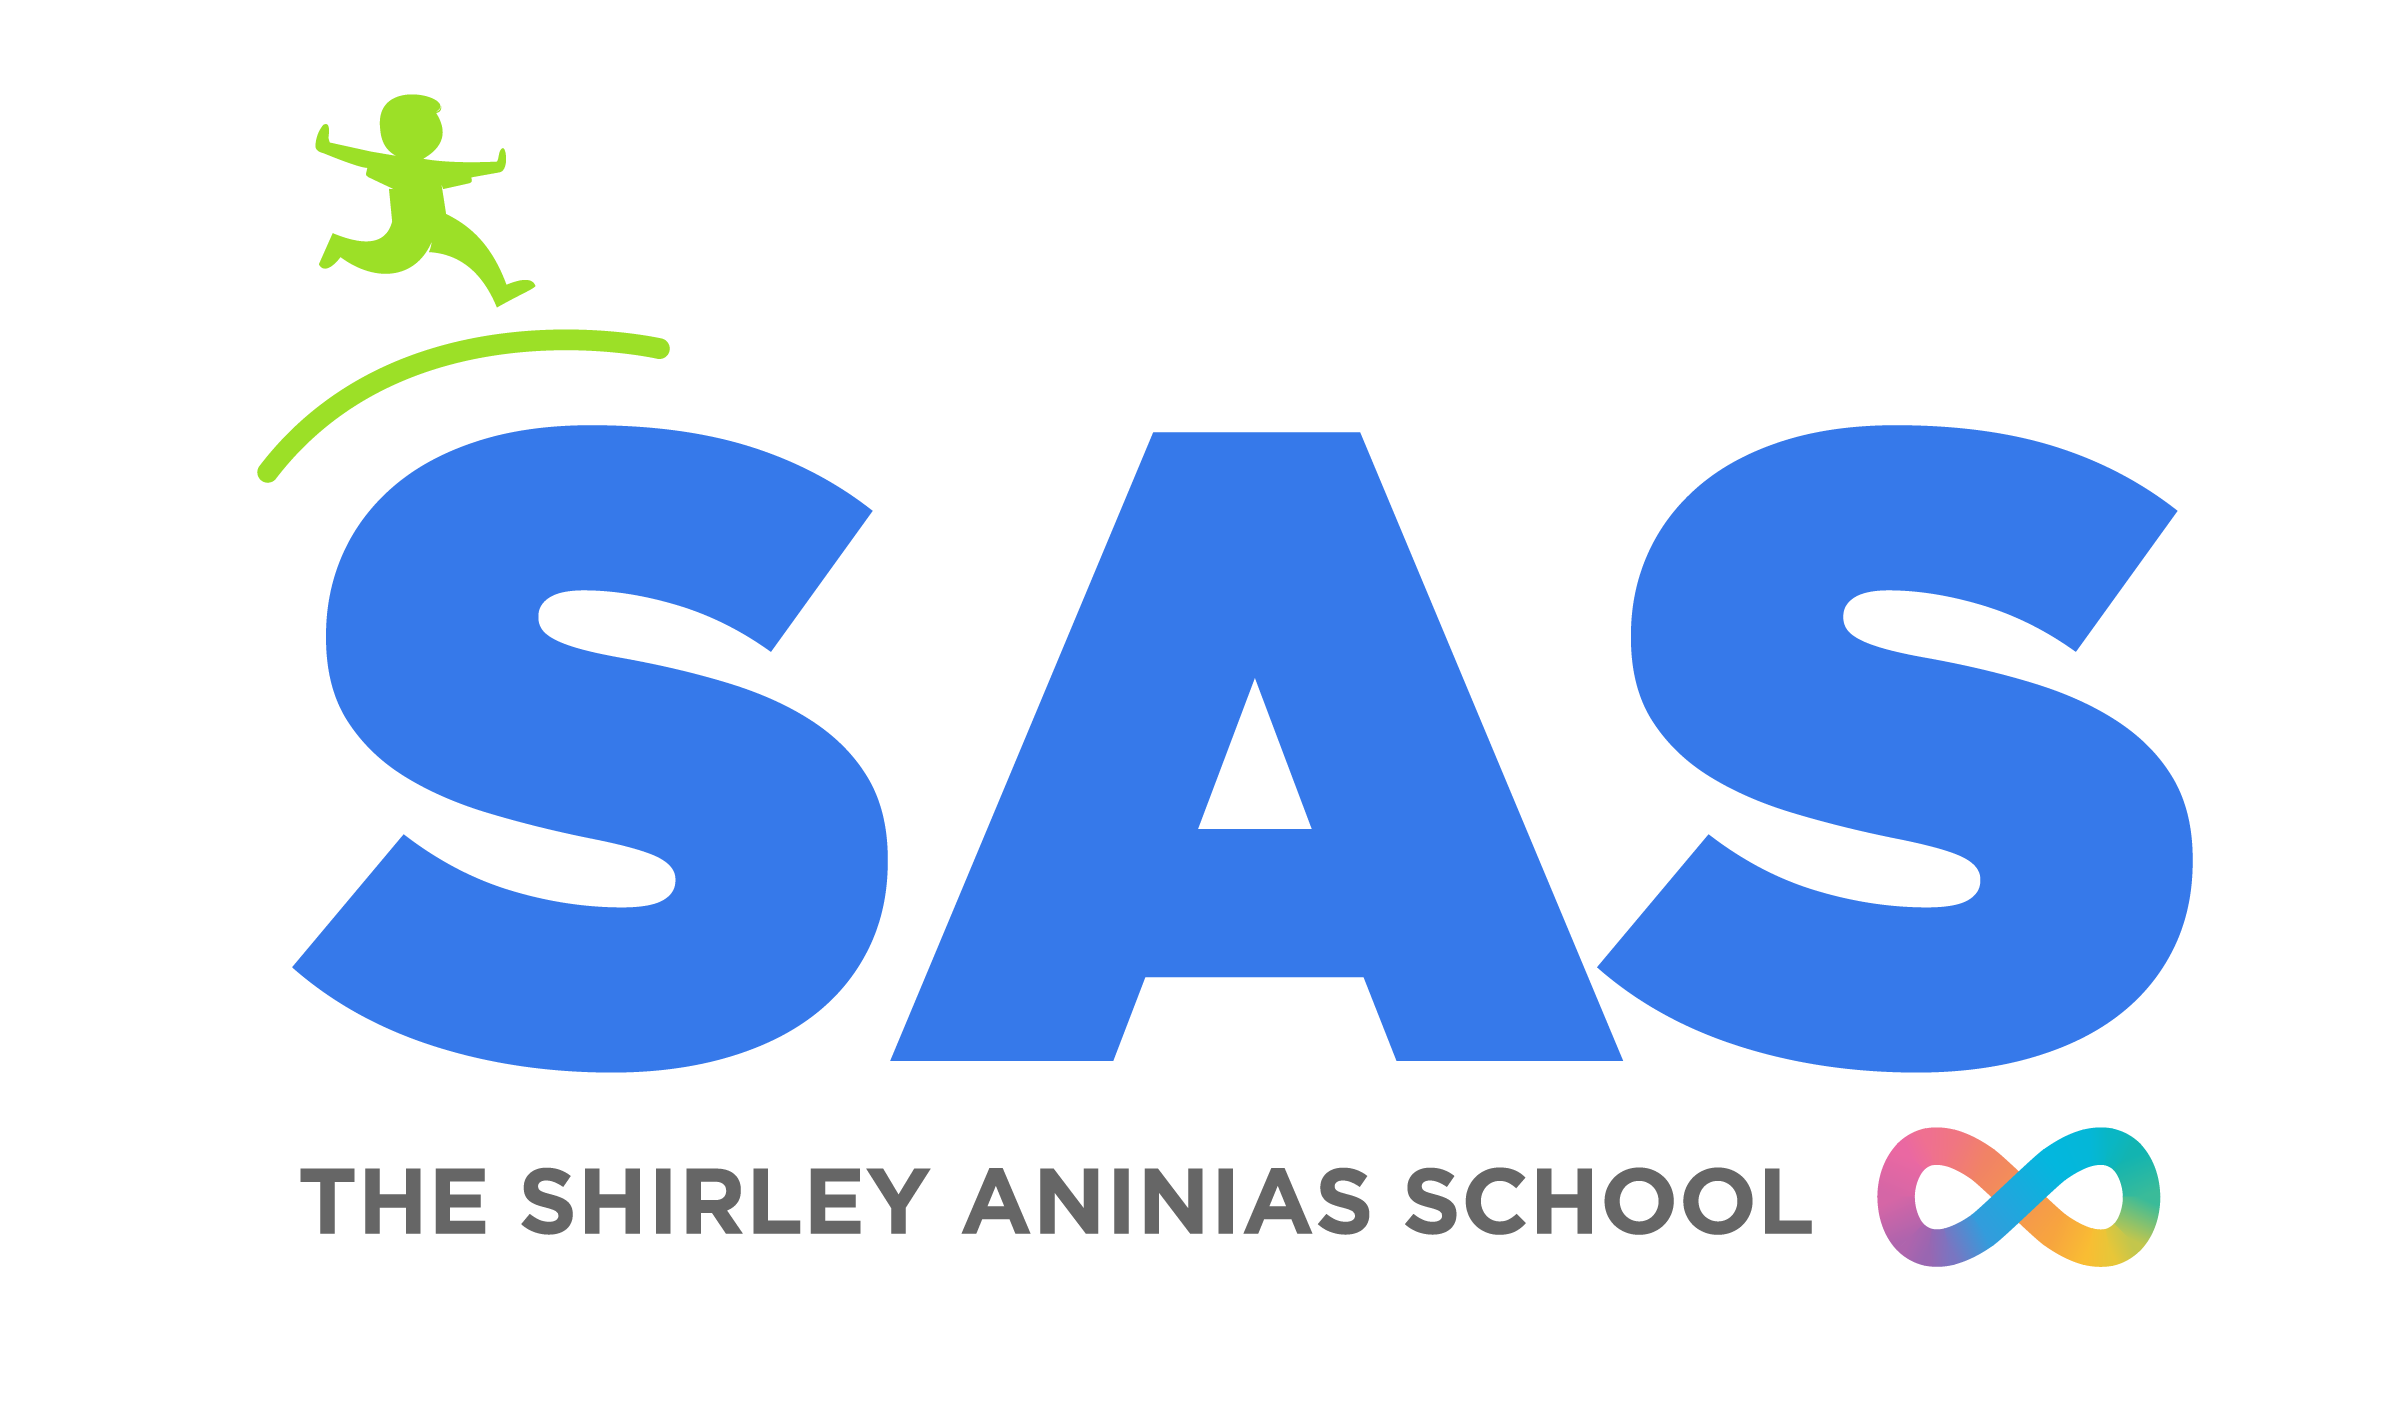 The Shirley Aninias School